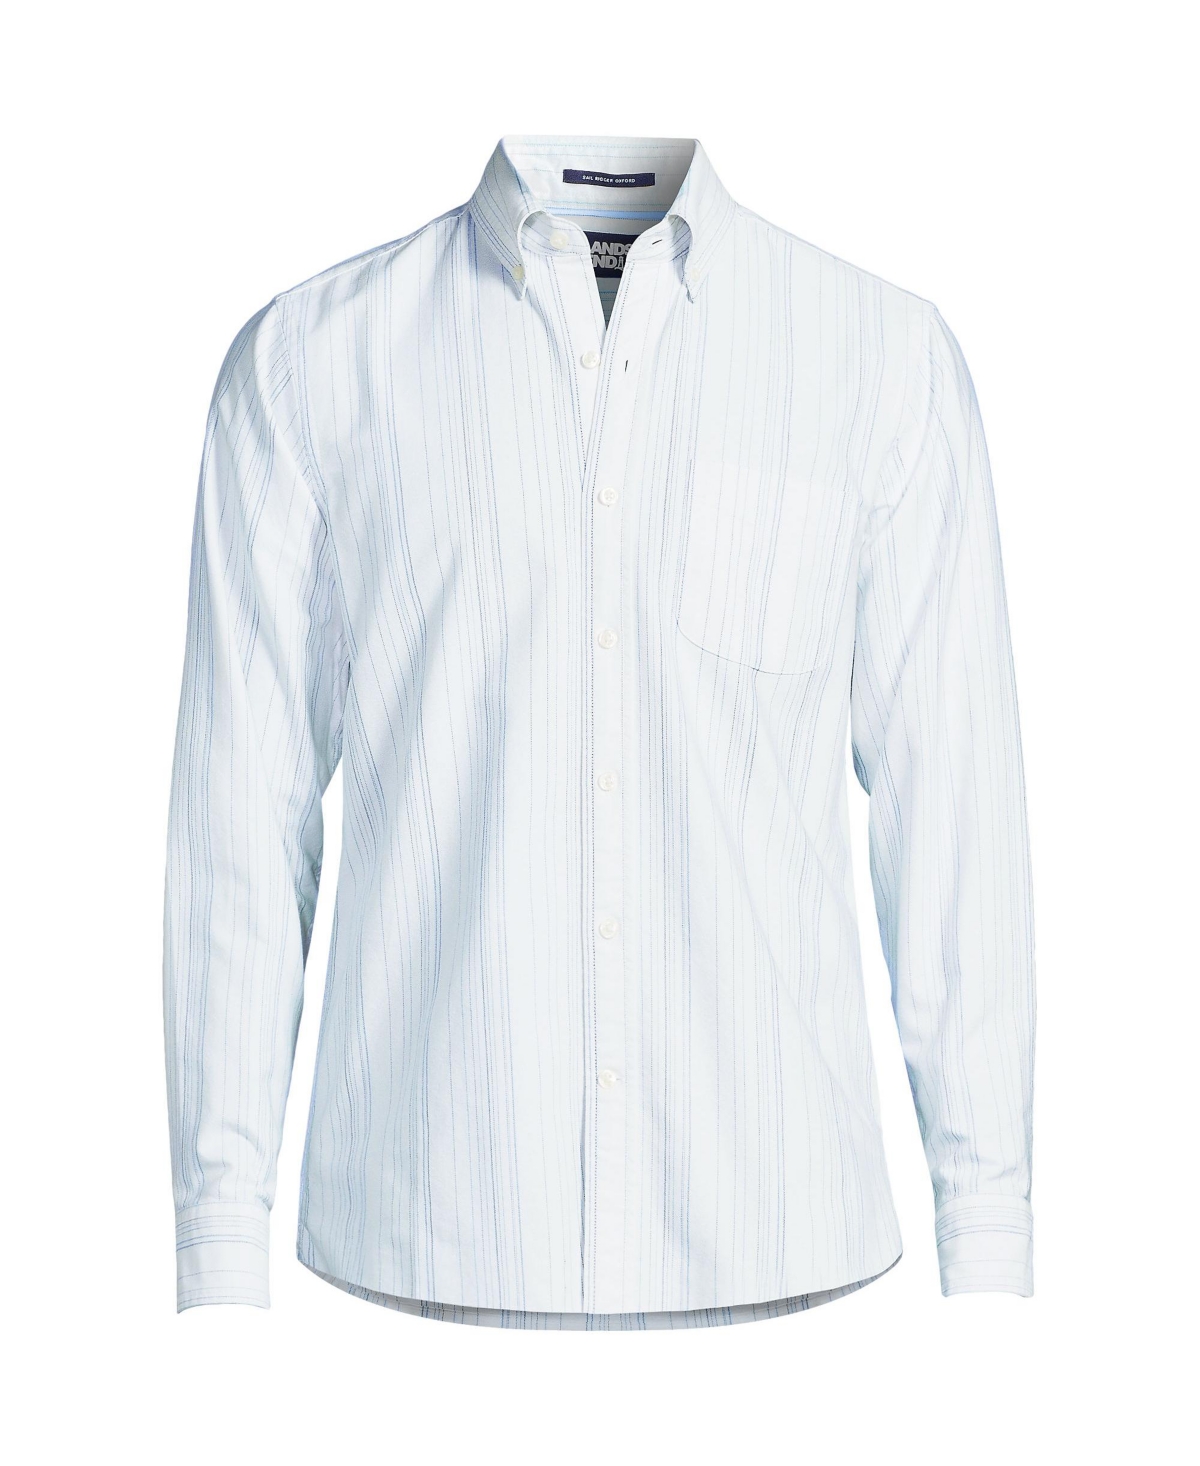 Men's Traditional Fit Sail Rigger Oxford Shirt - White/blue multi pinstripe